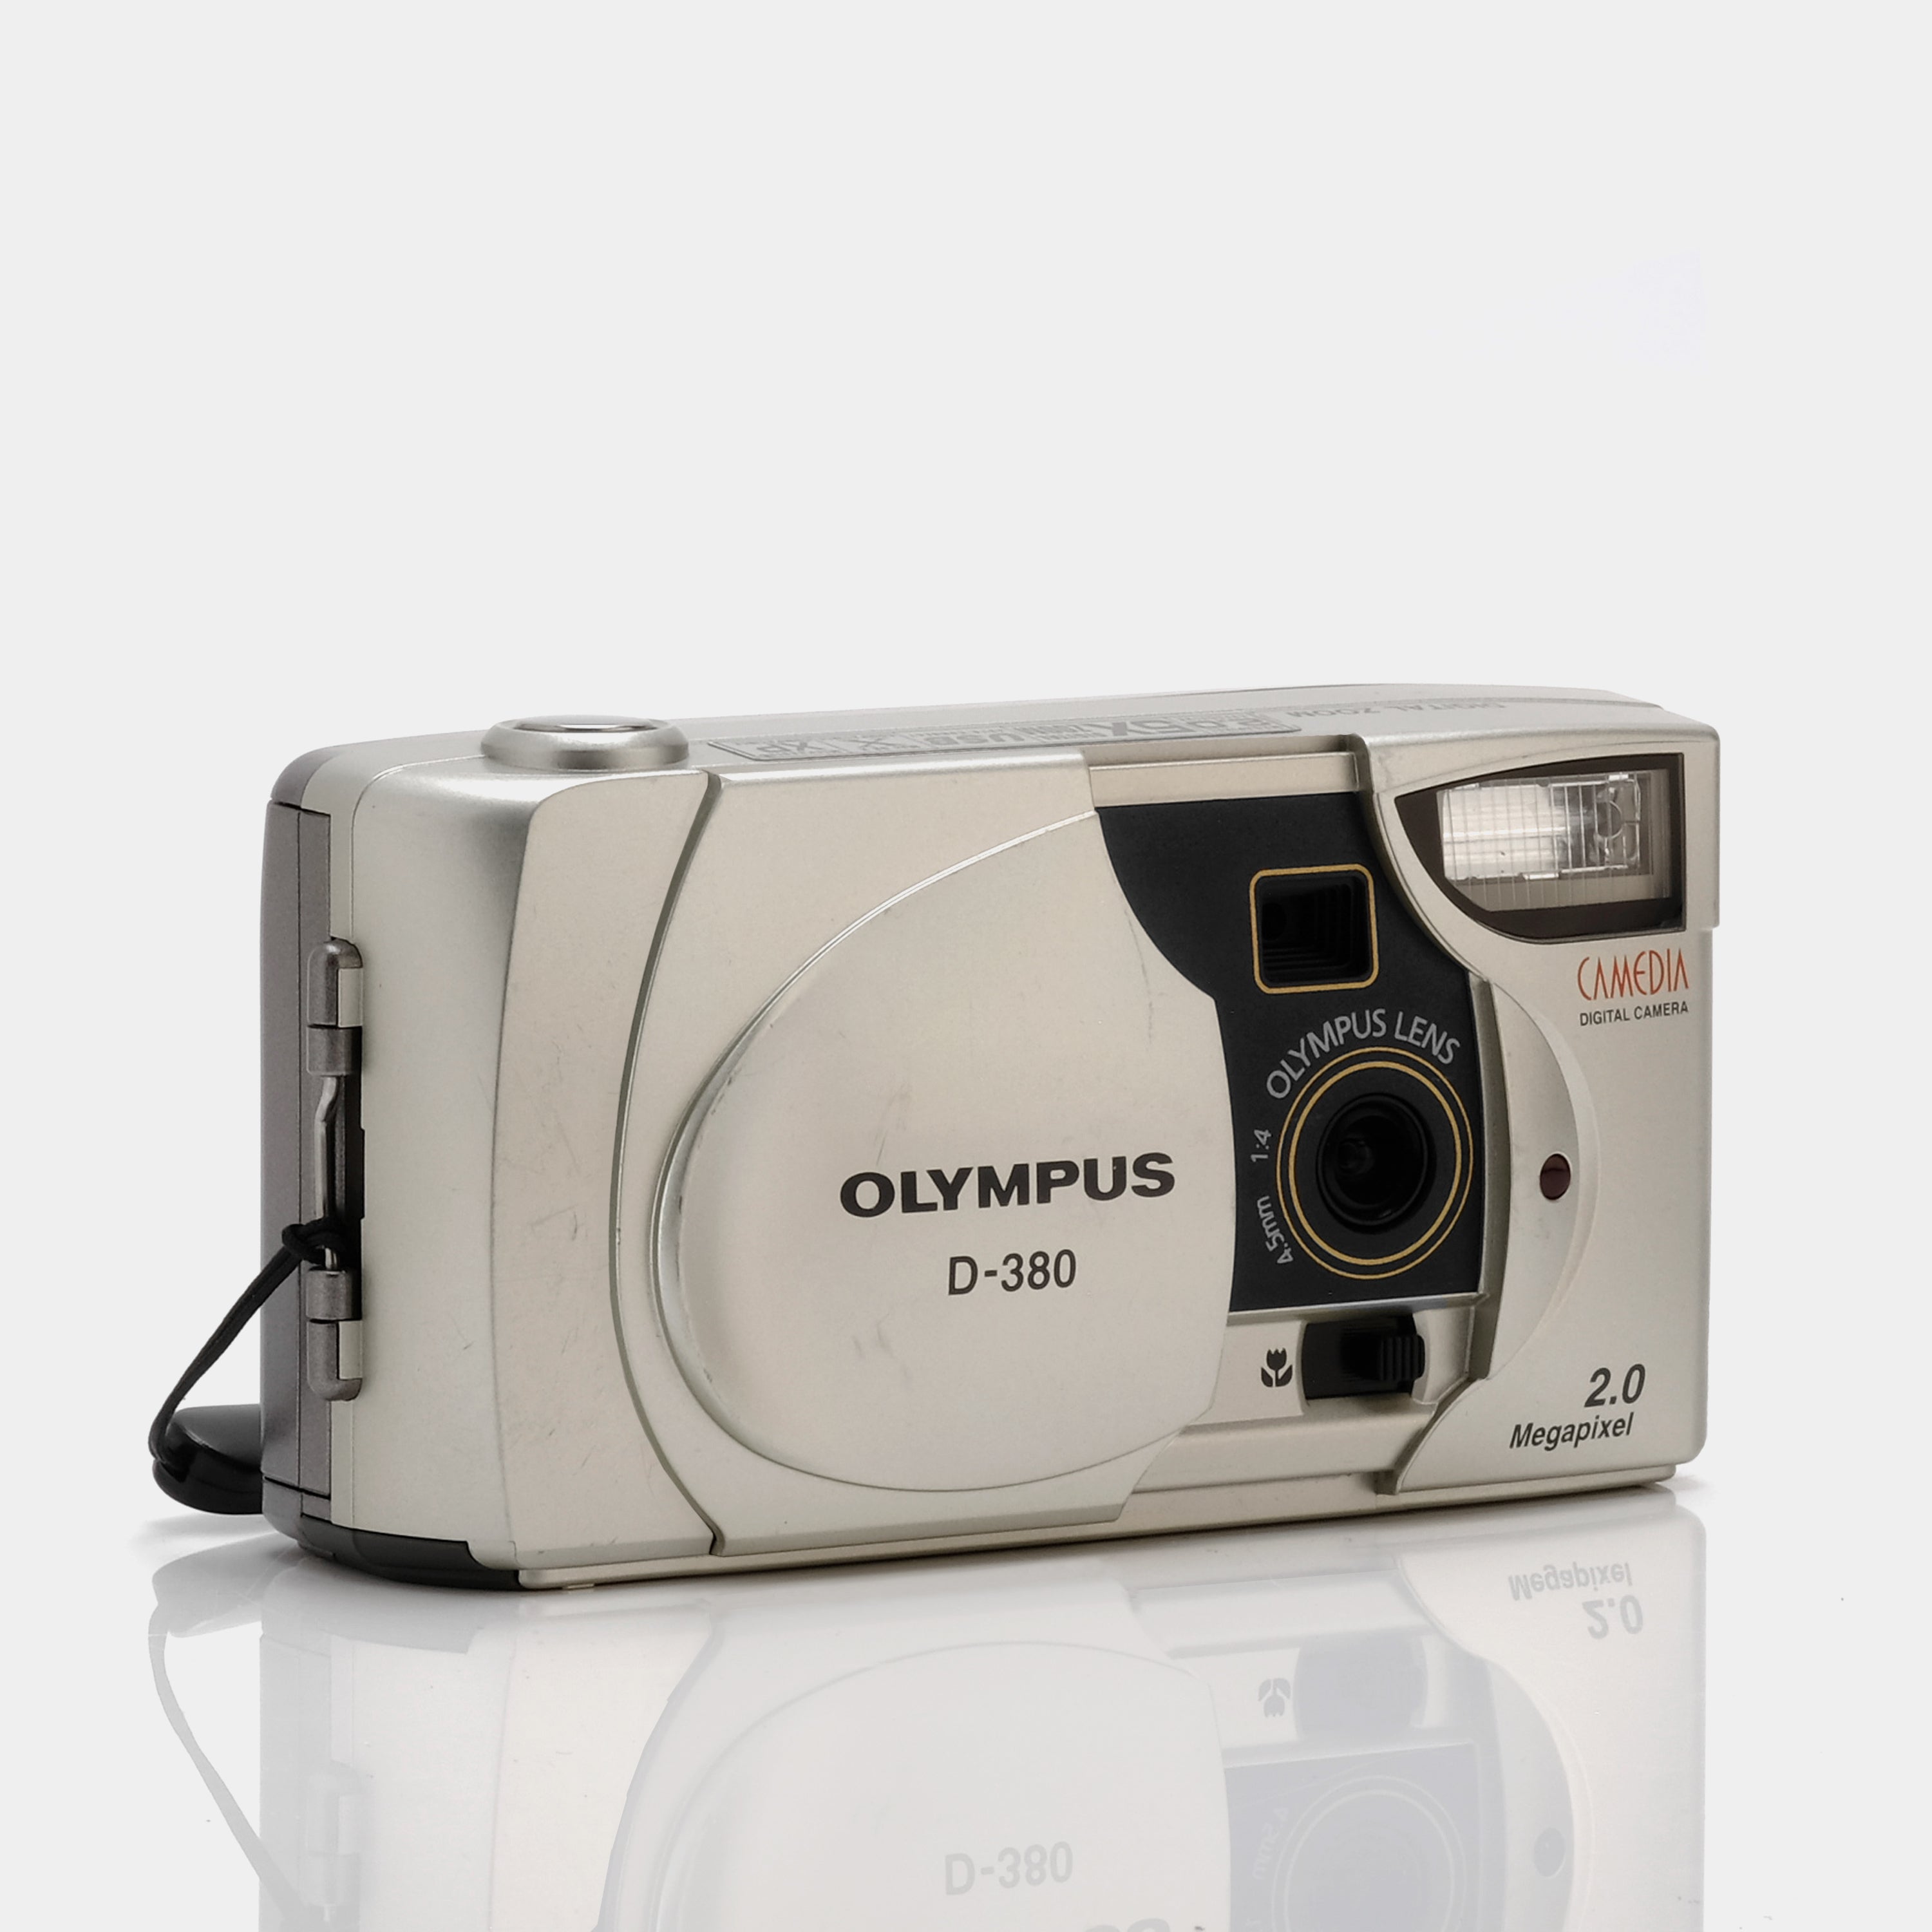 Olympus Camedia D-380 Point and Shoot Digital Camera